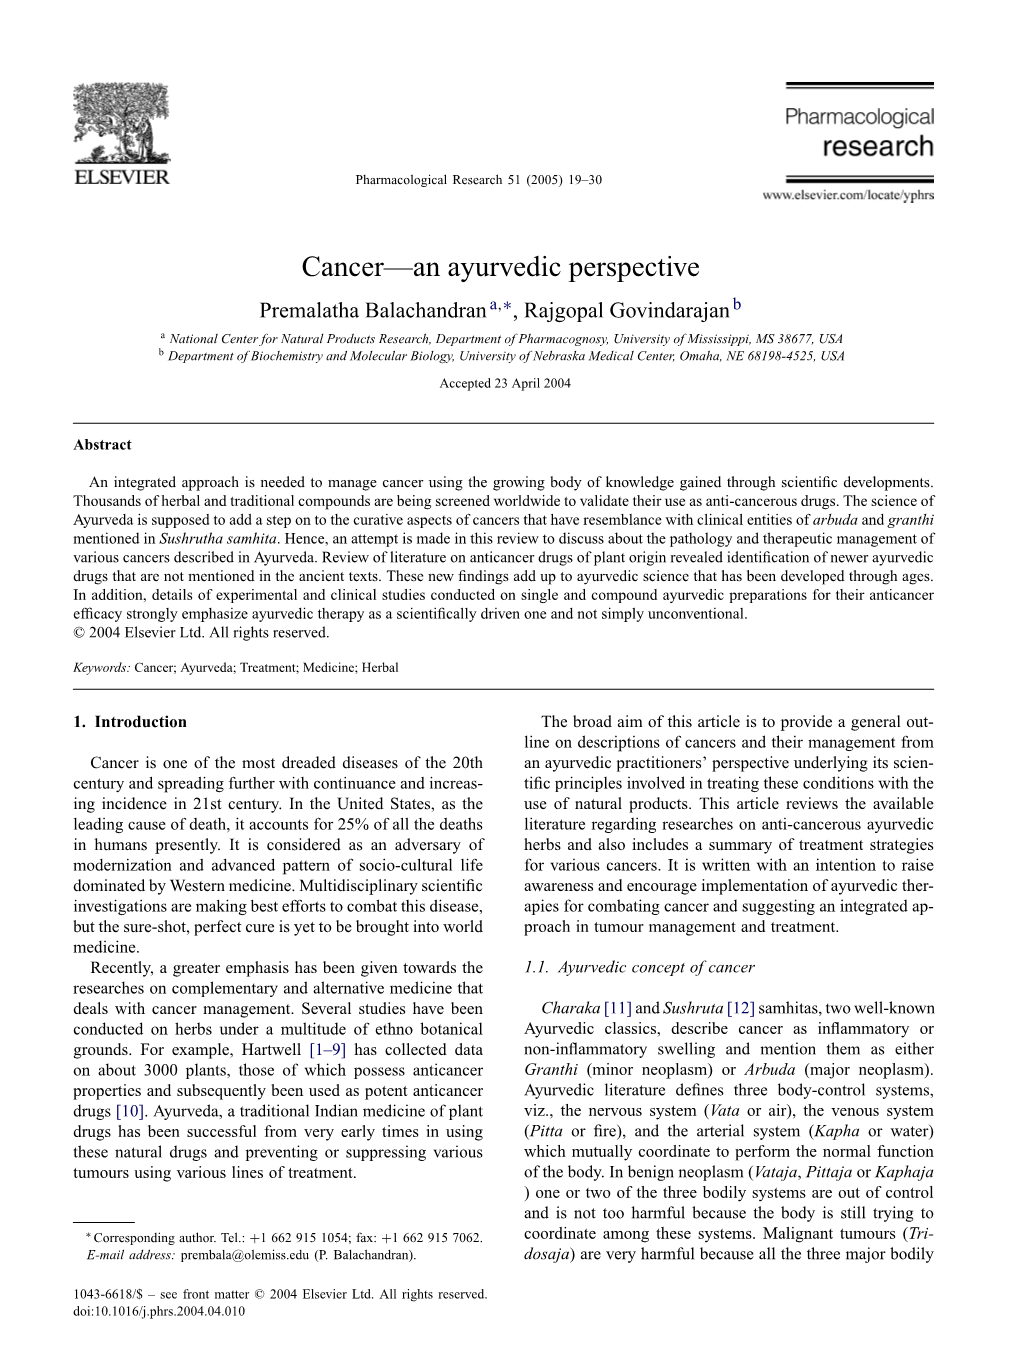 Cancer—An Ayurvedic Perspective